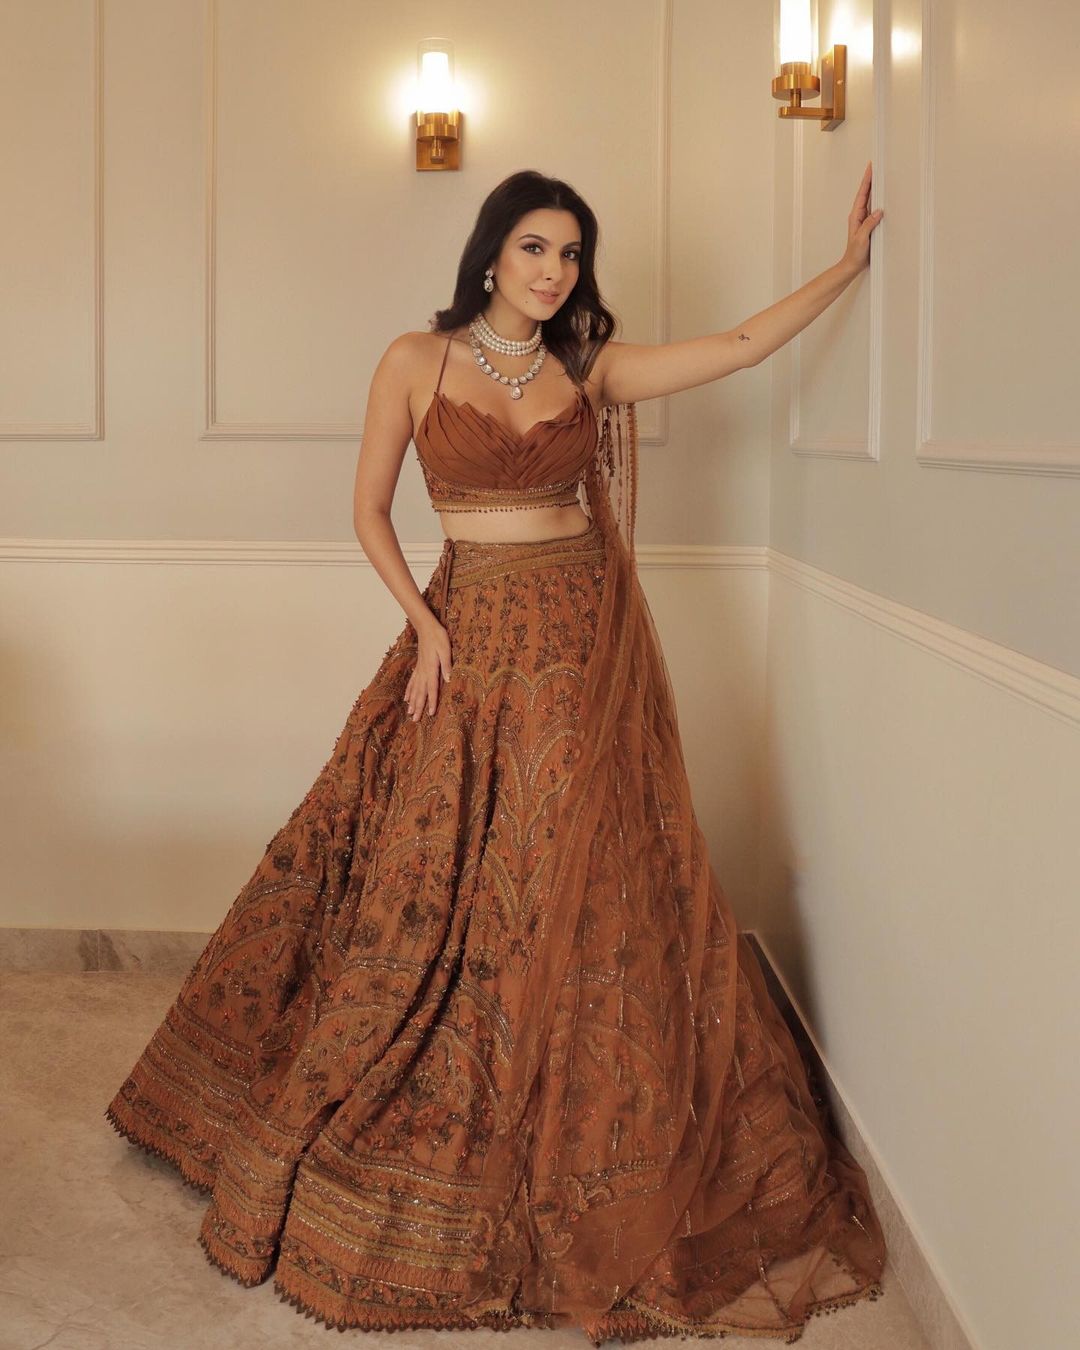 designer sangeet outfit for bridesmaids featuring brown lehenga choli